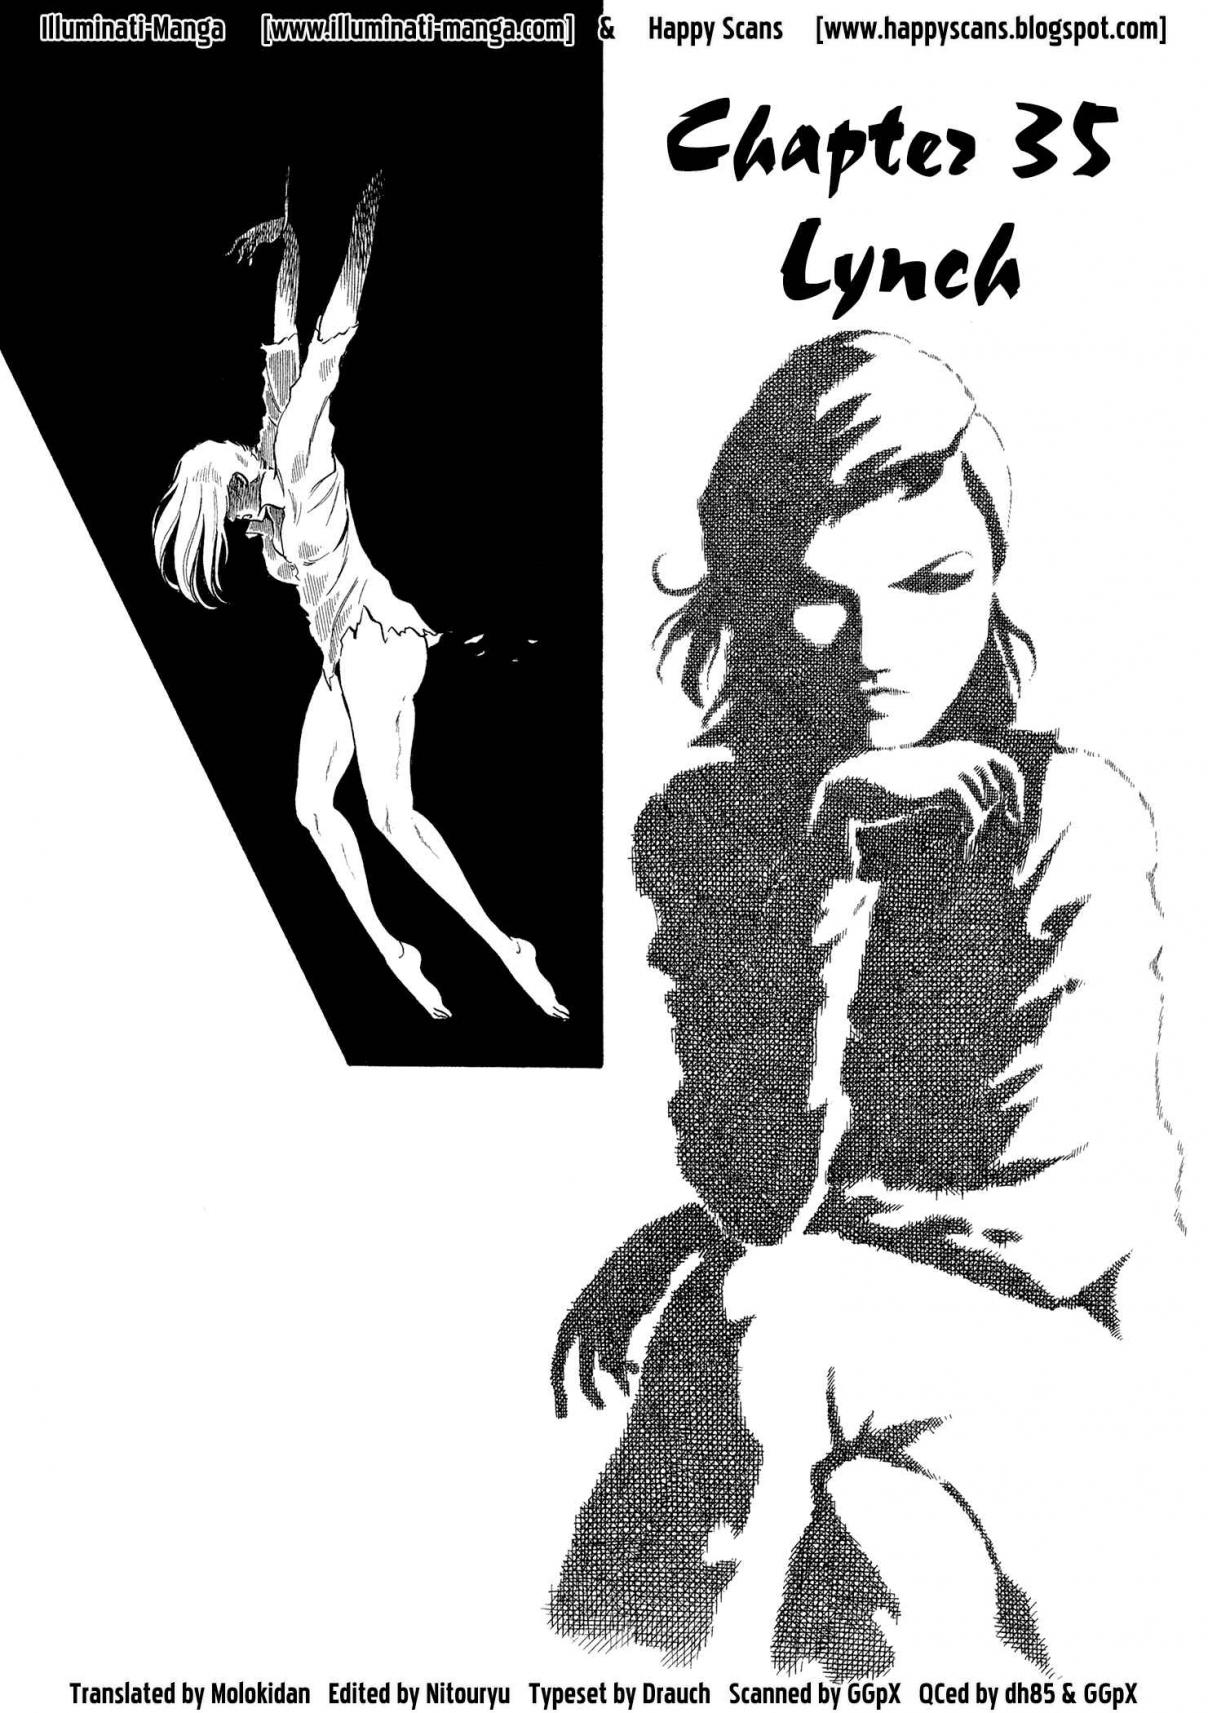 Sasori Vol. 3 Ch. 35 Lynch